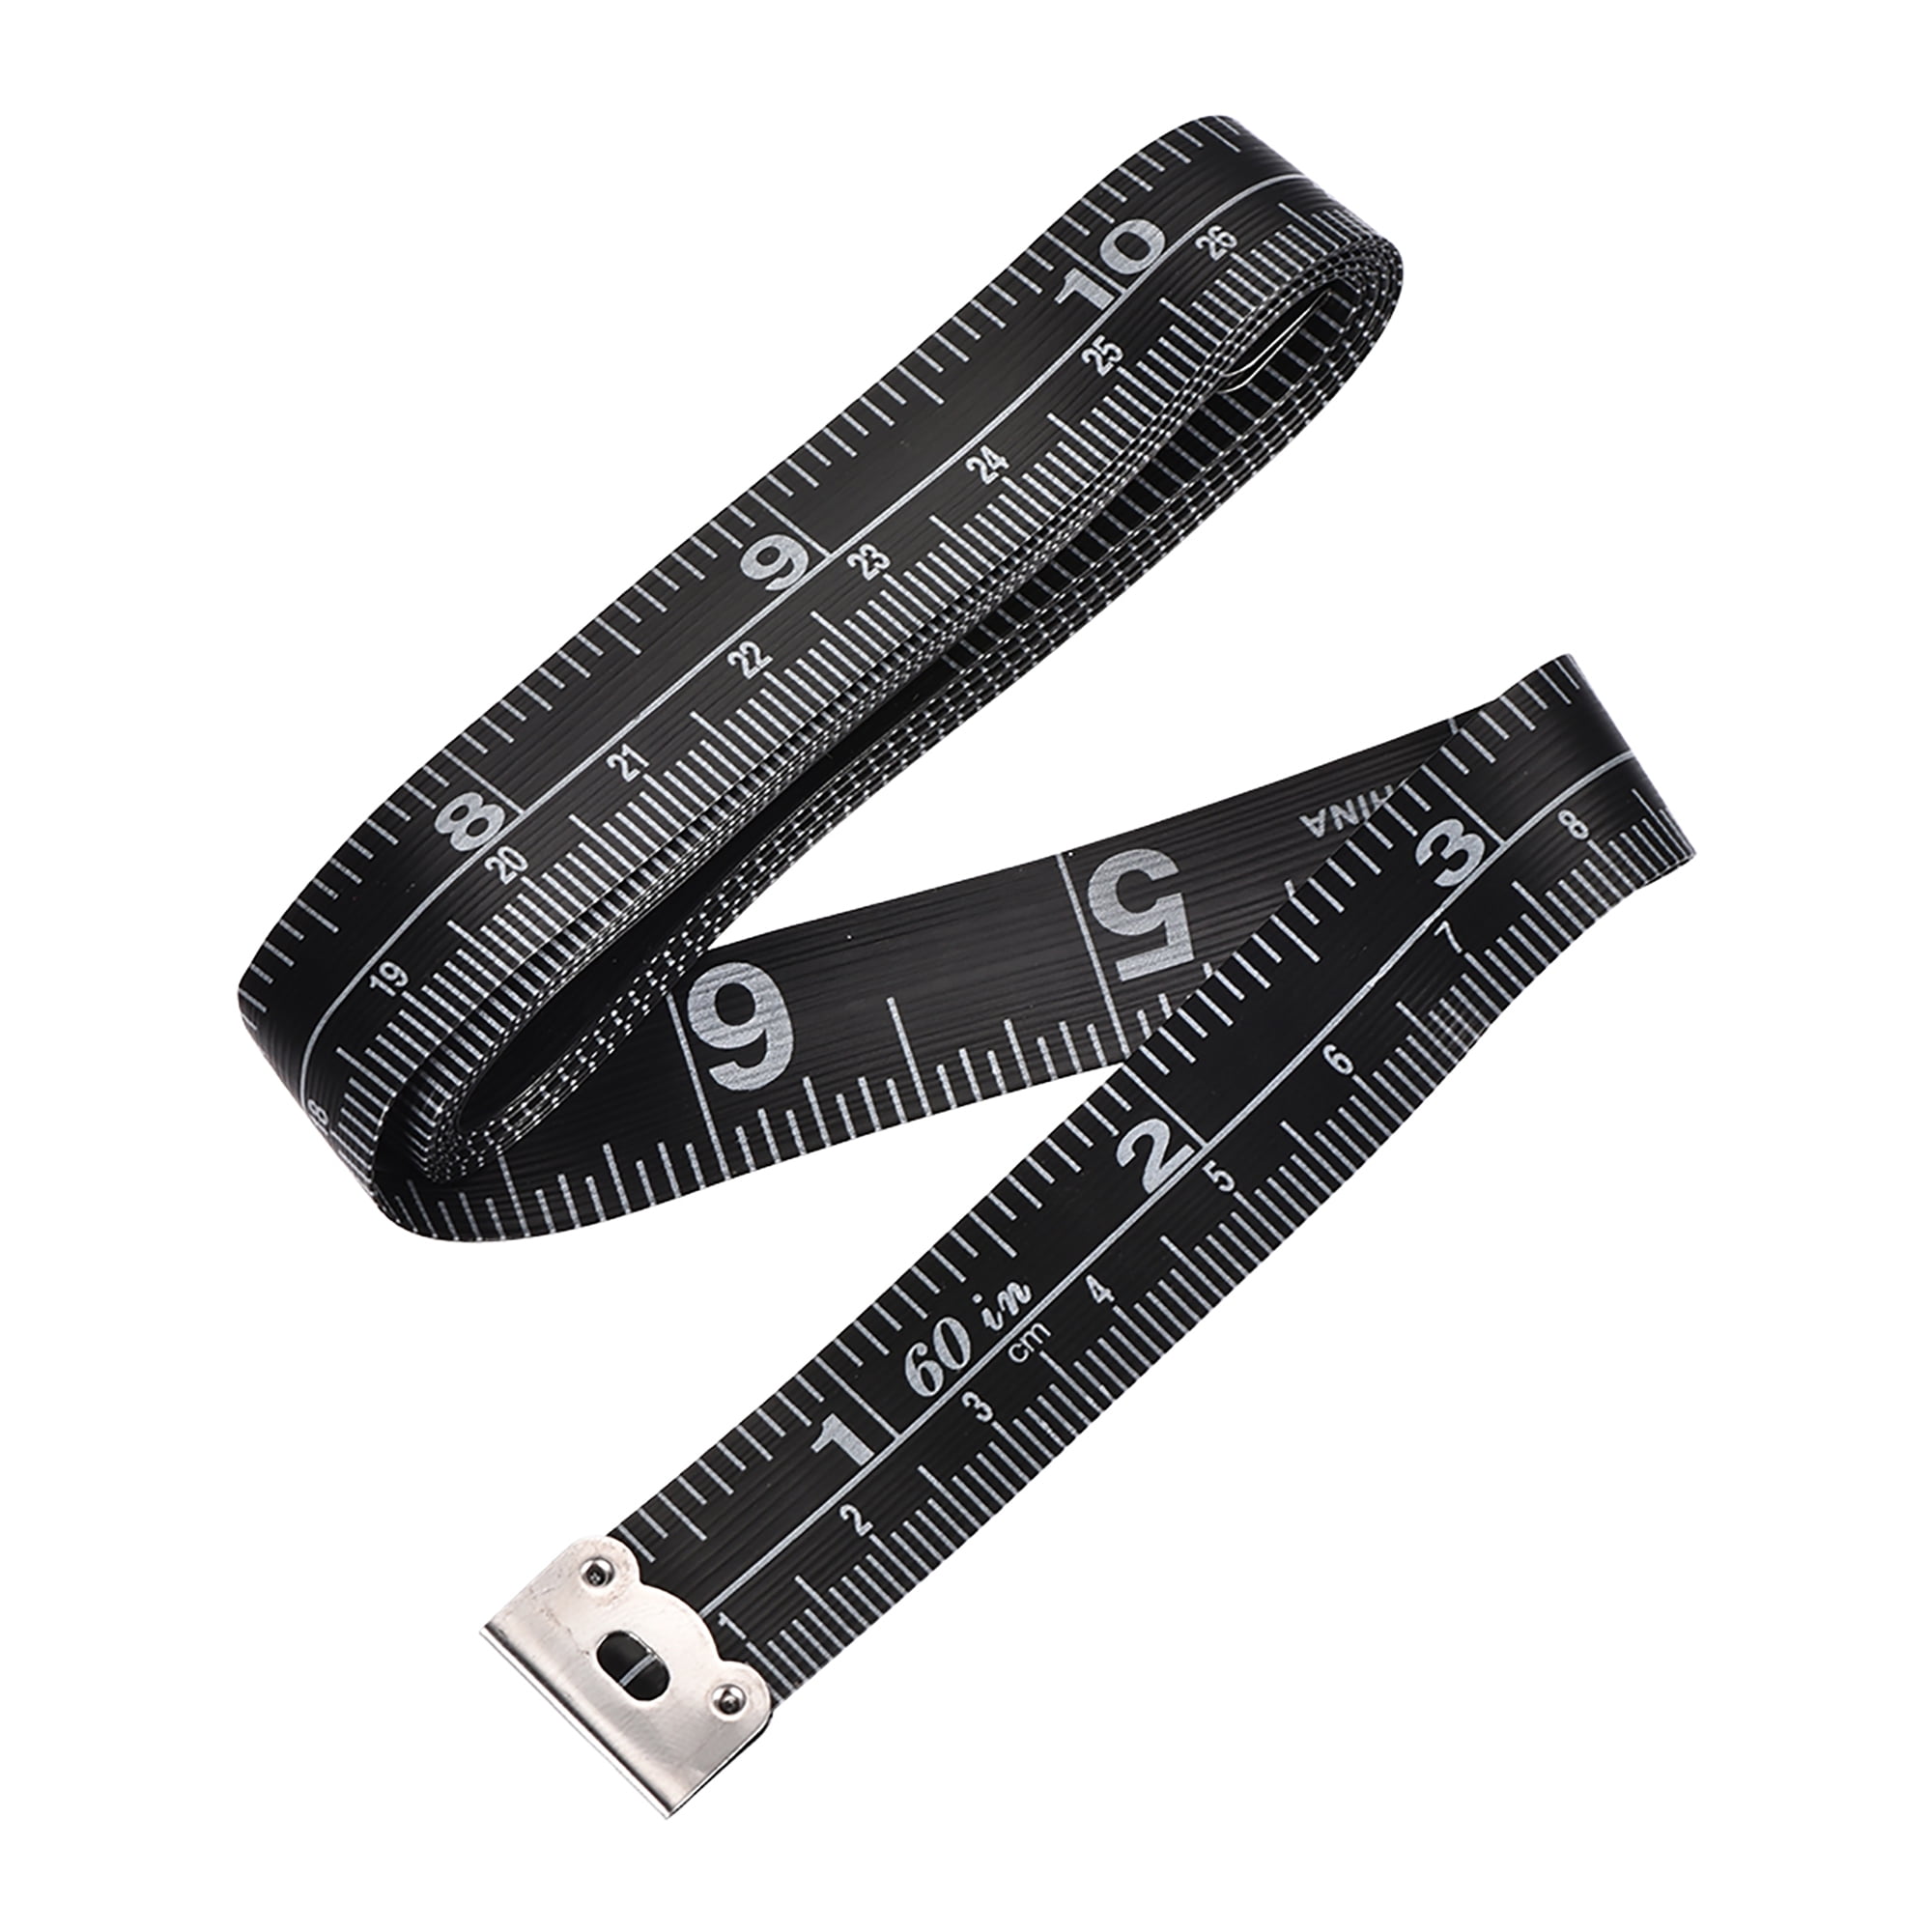 TR-16BK - 60 Tailor's Tape Measure (Black) For Sale